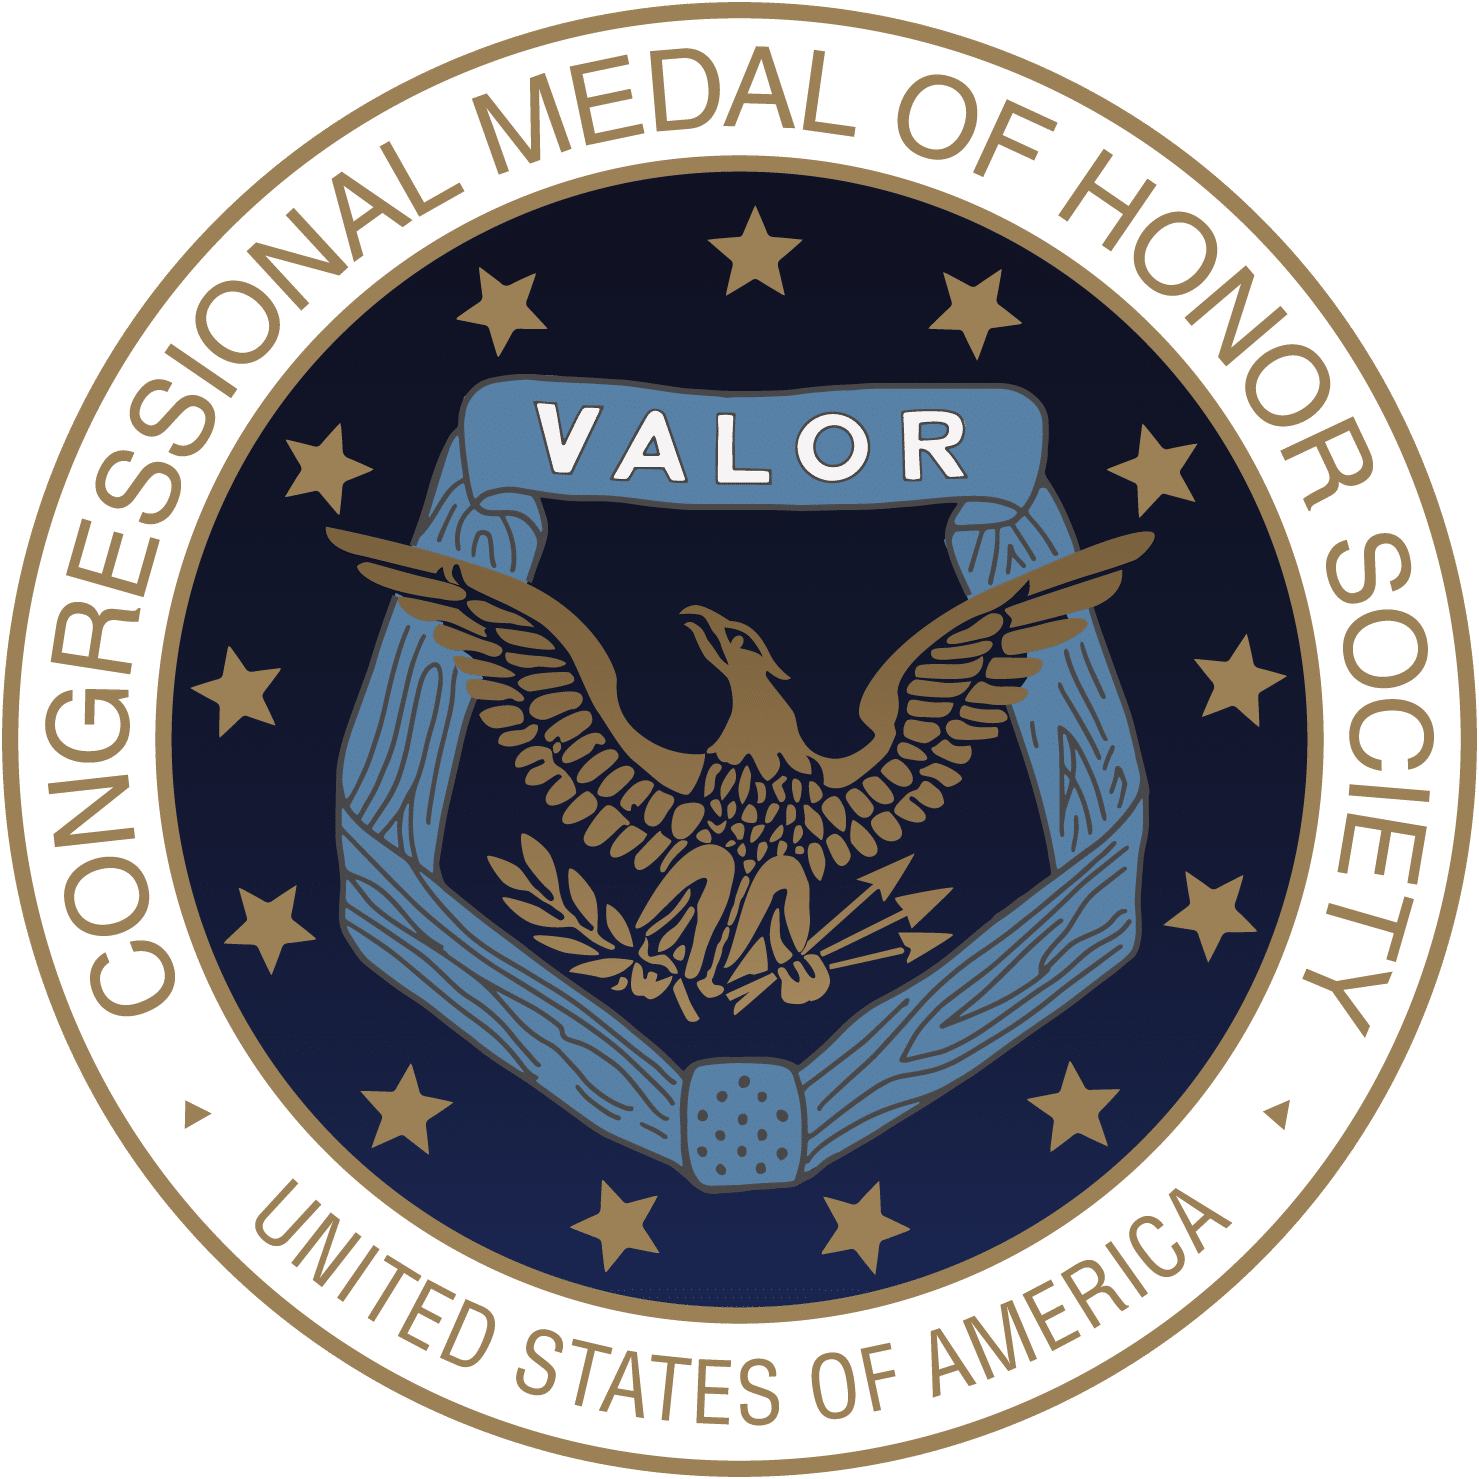 Congressional Medal of Honor Society William Atkinson Jones III